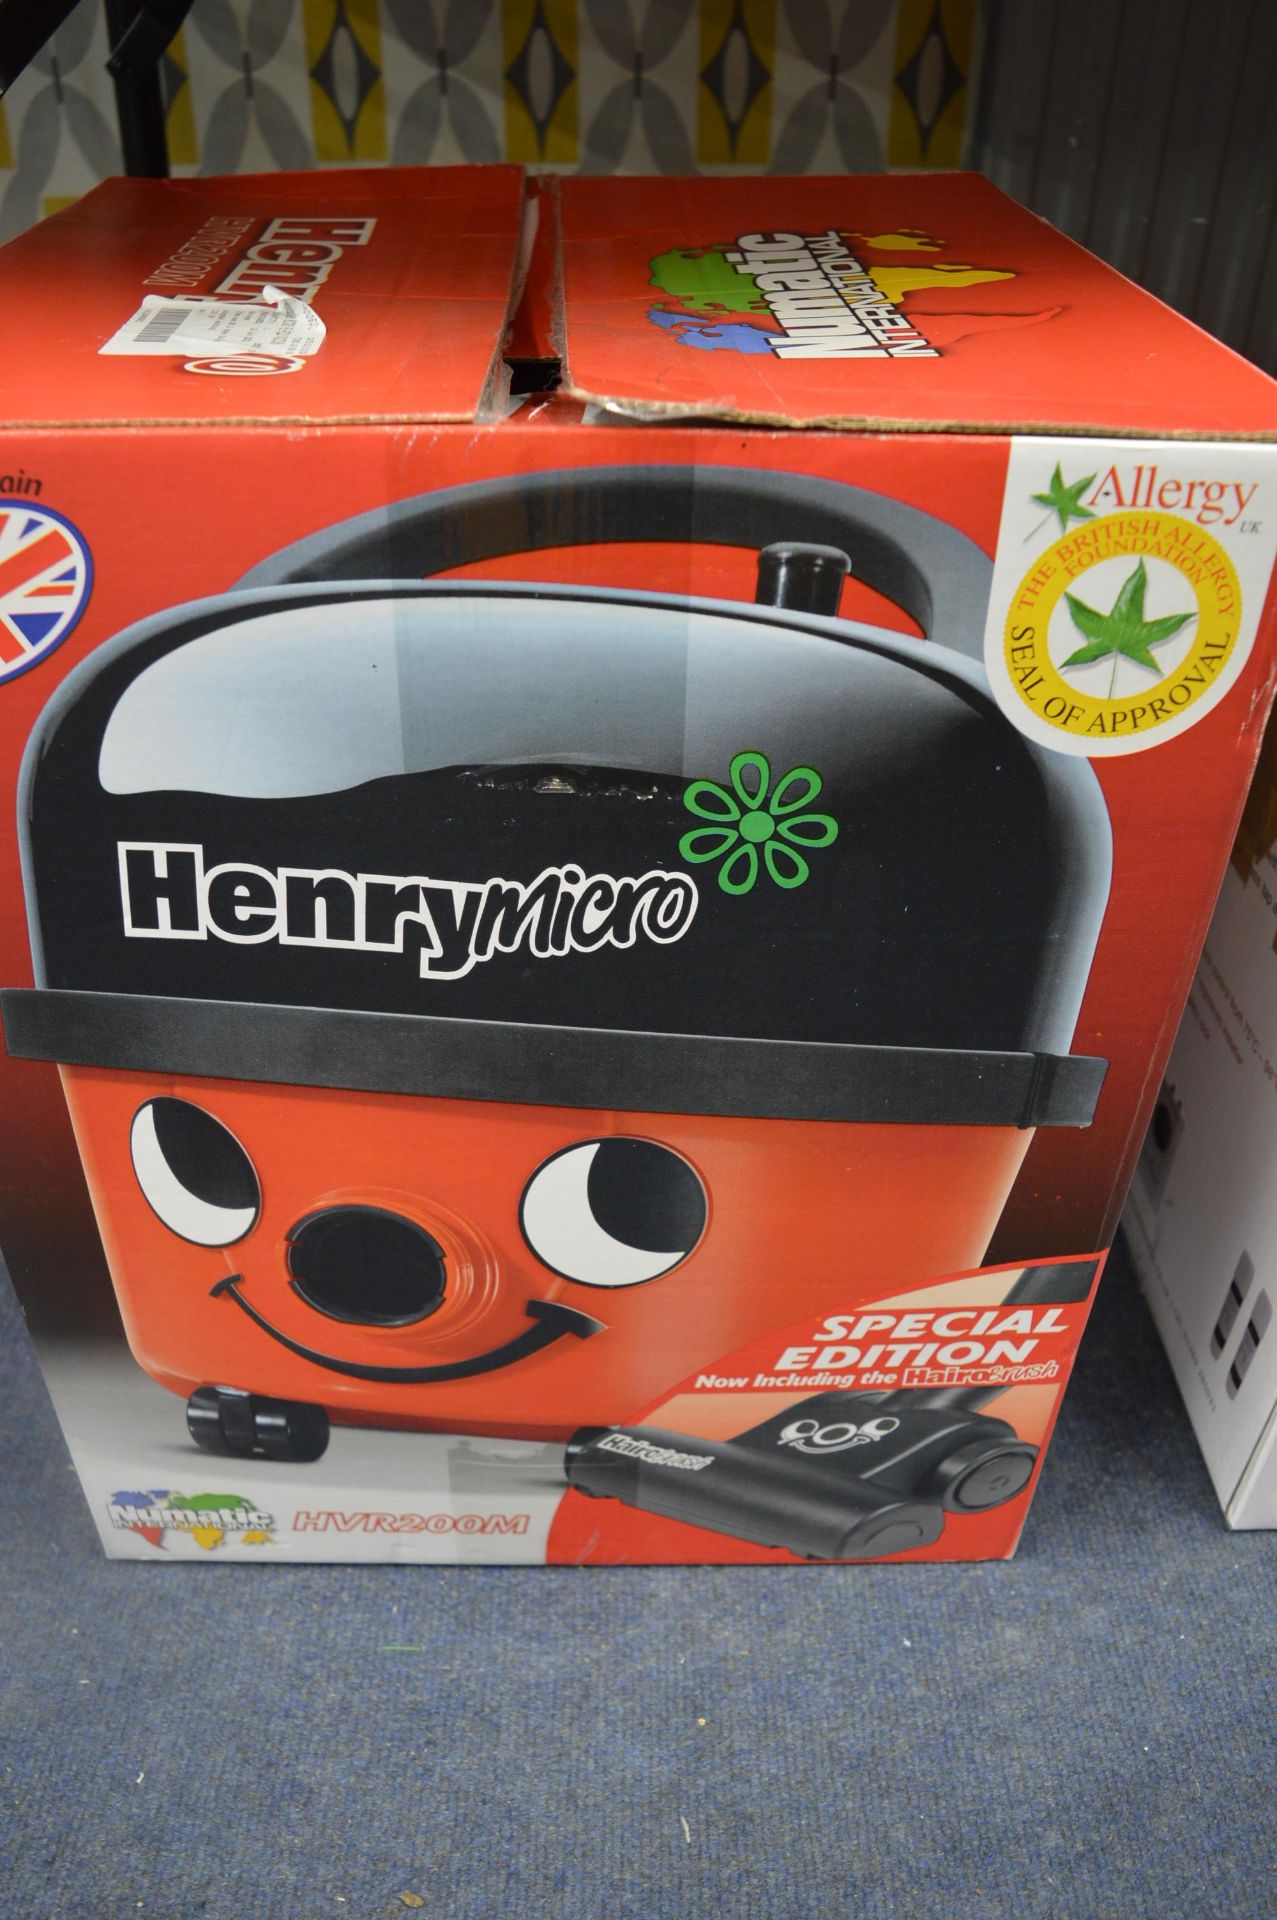 *Henry HVR200M Vacuum Cleaner